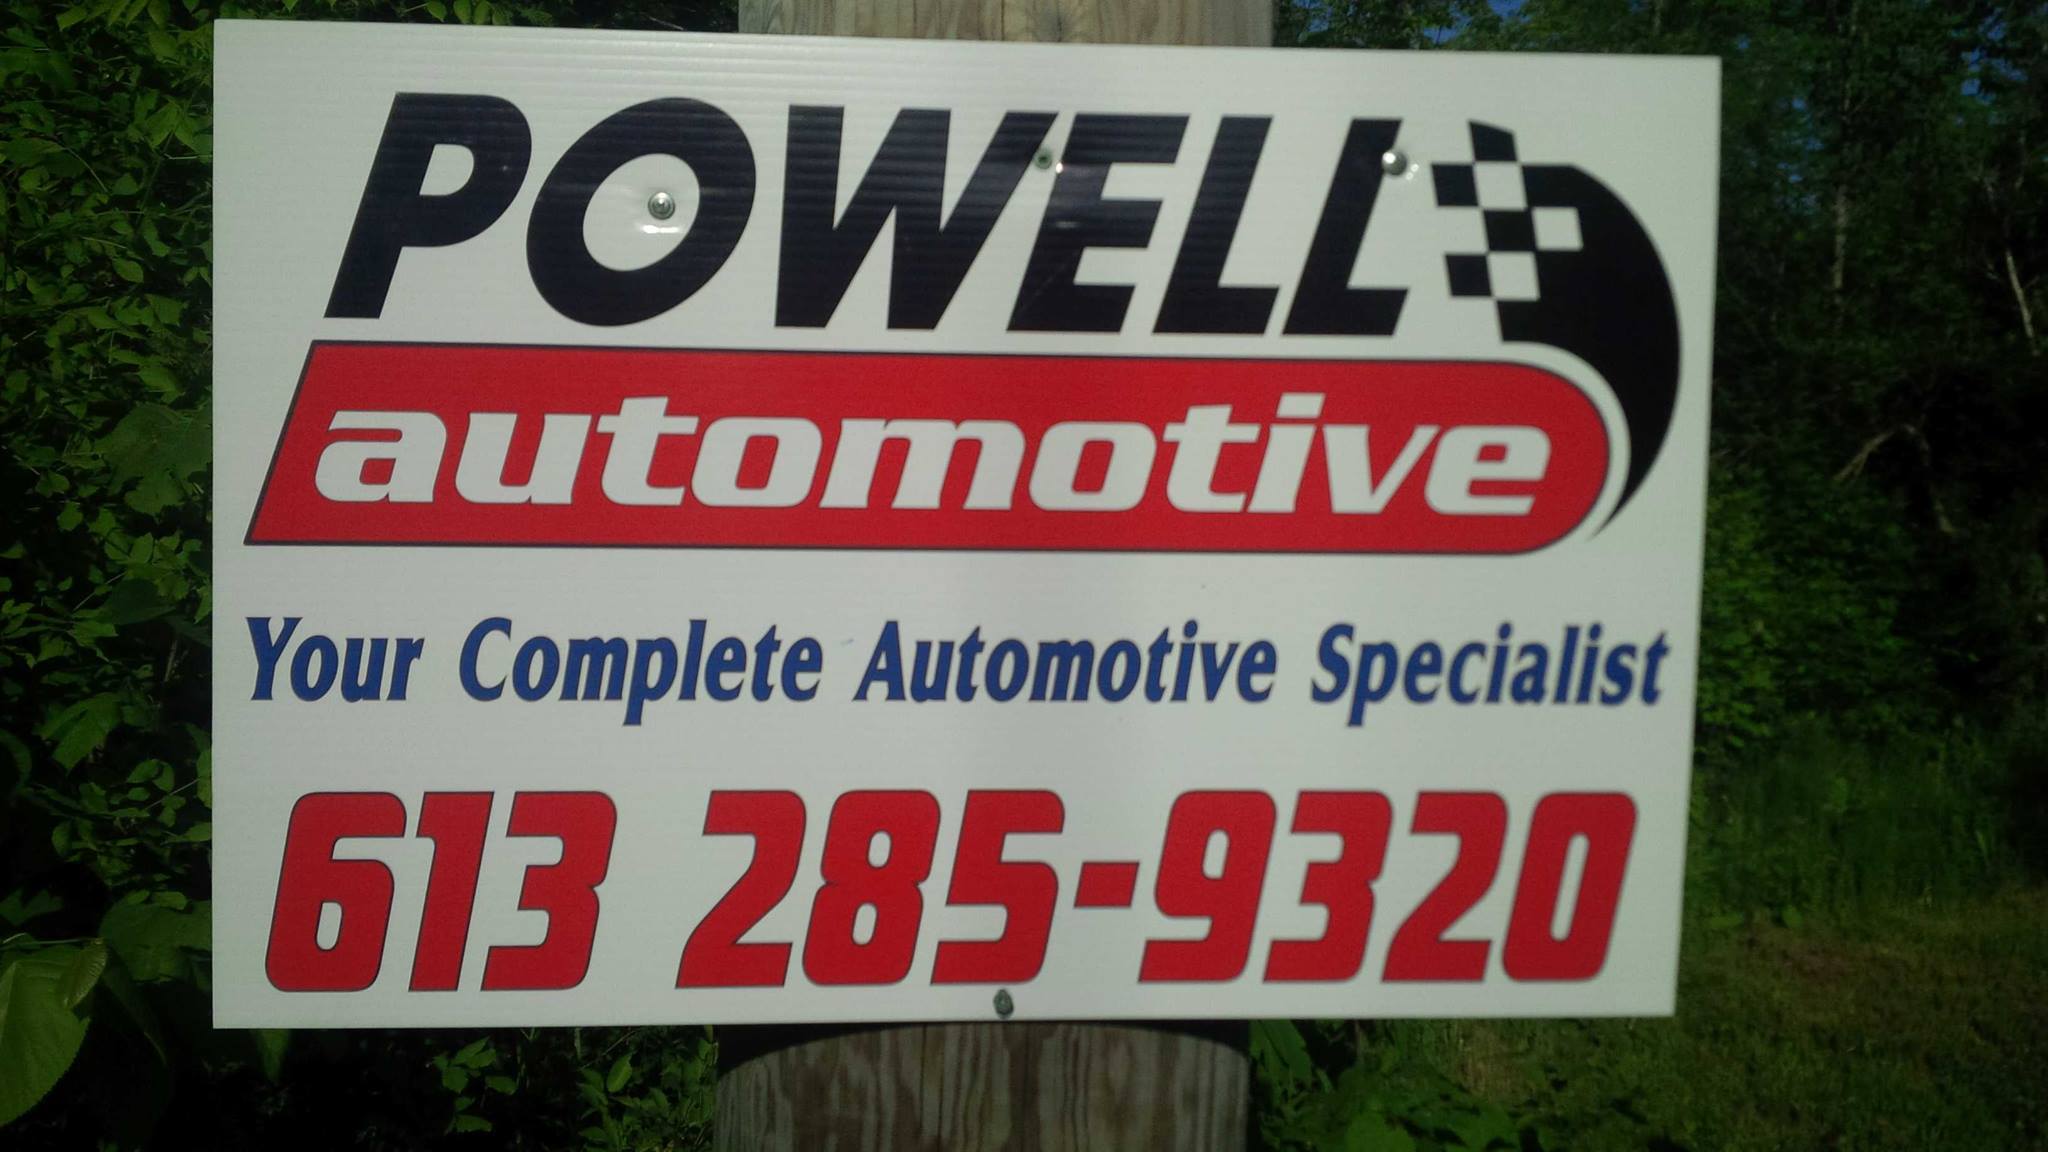 Powell Automotive